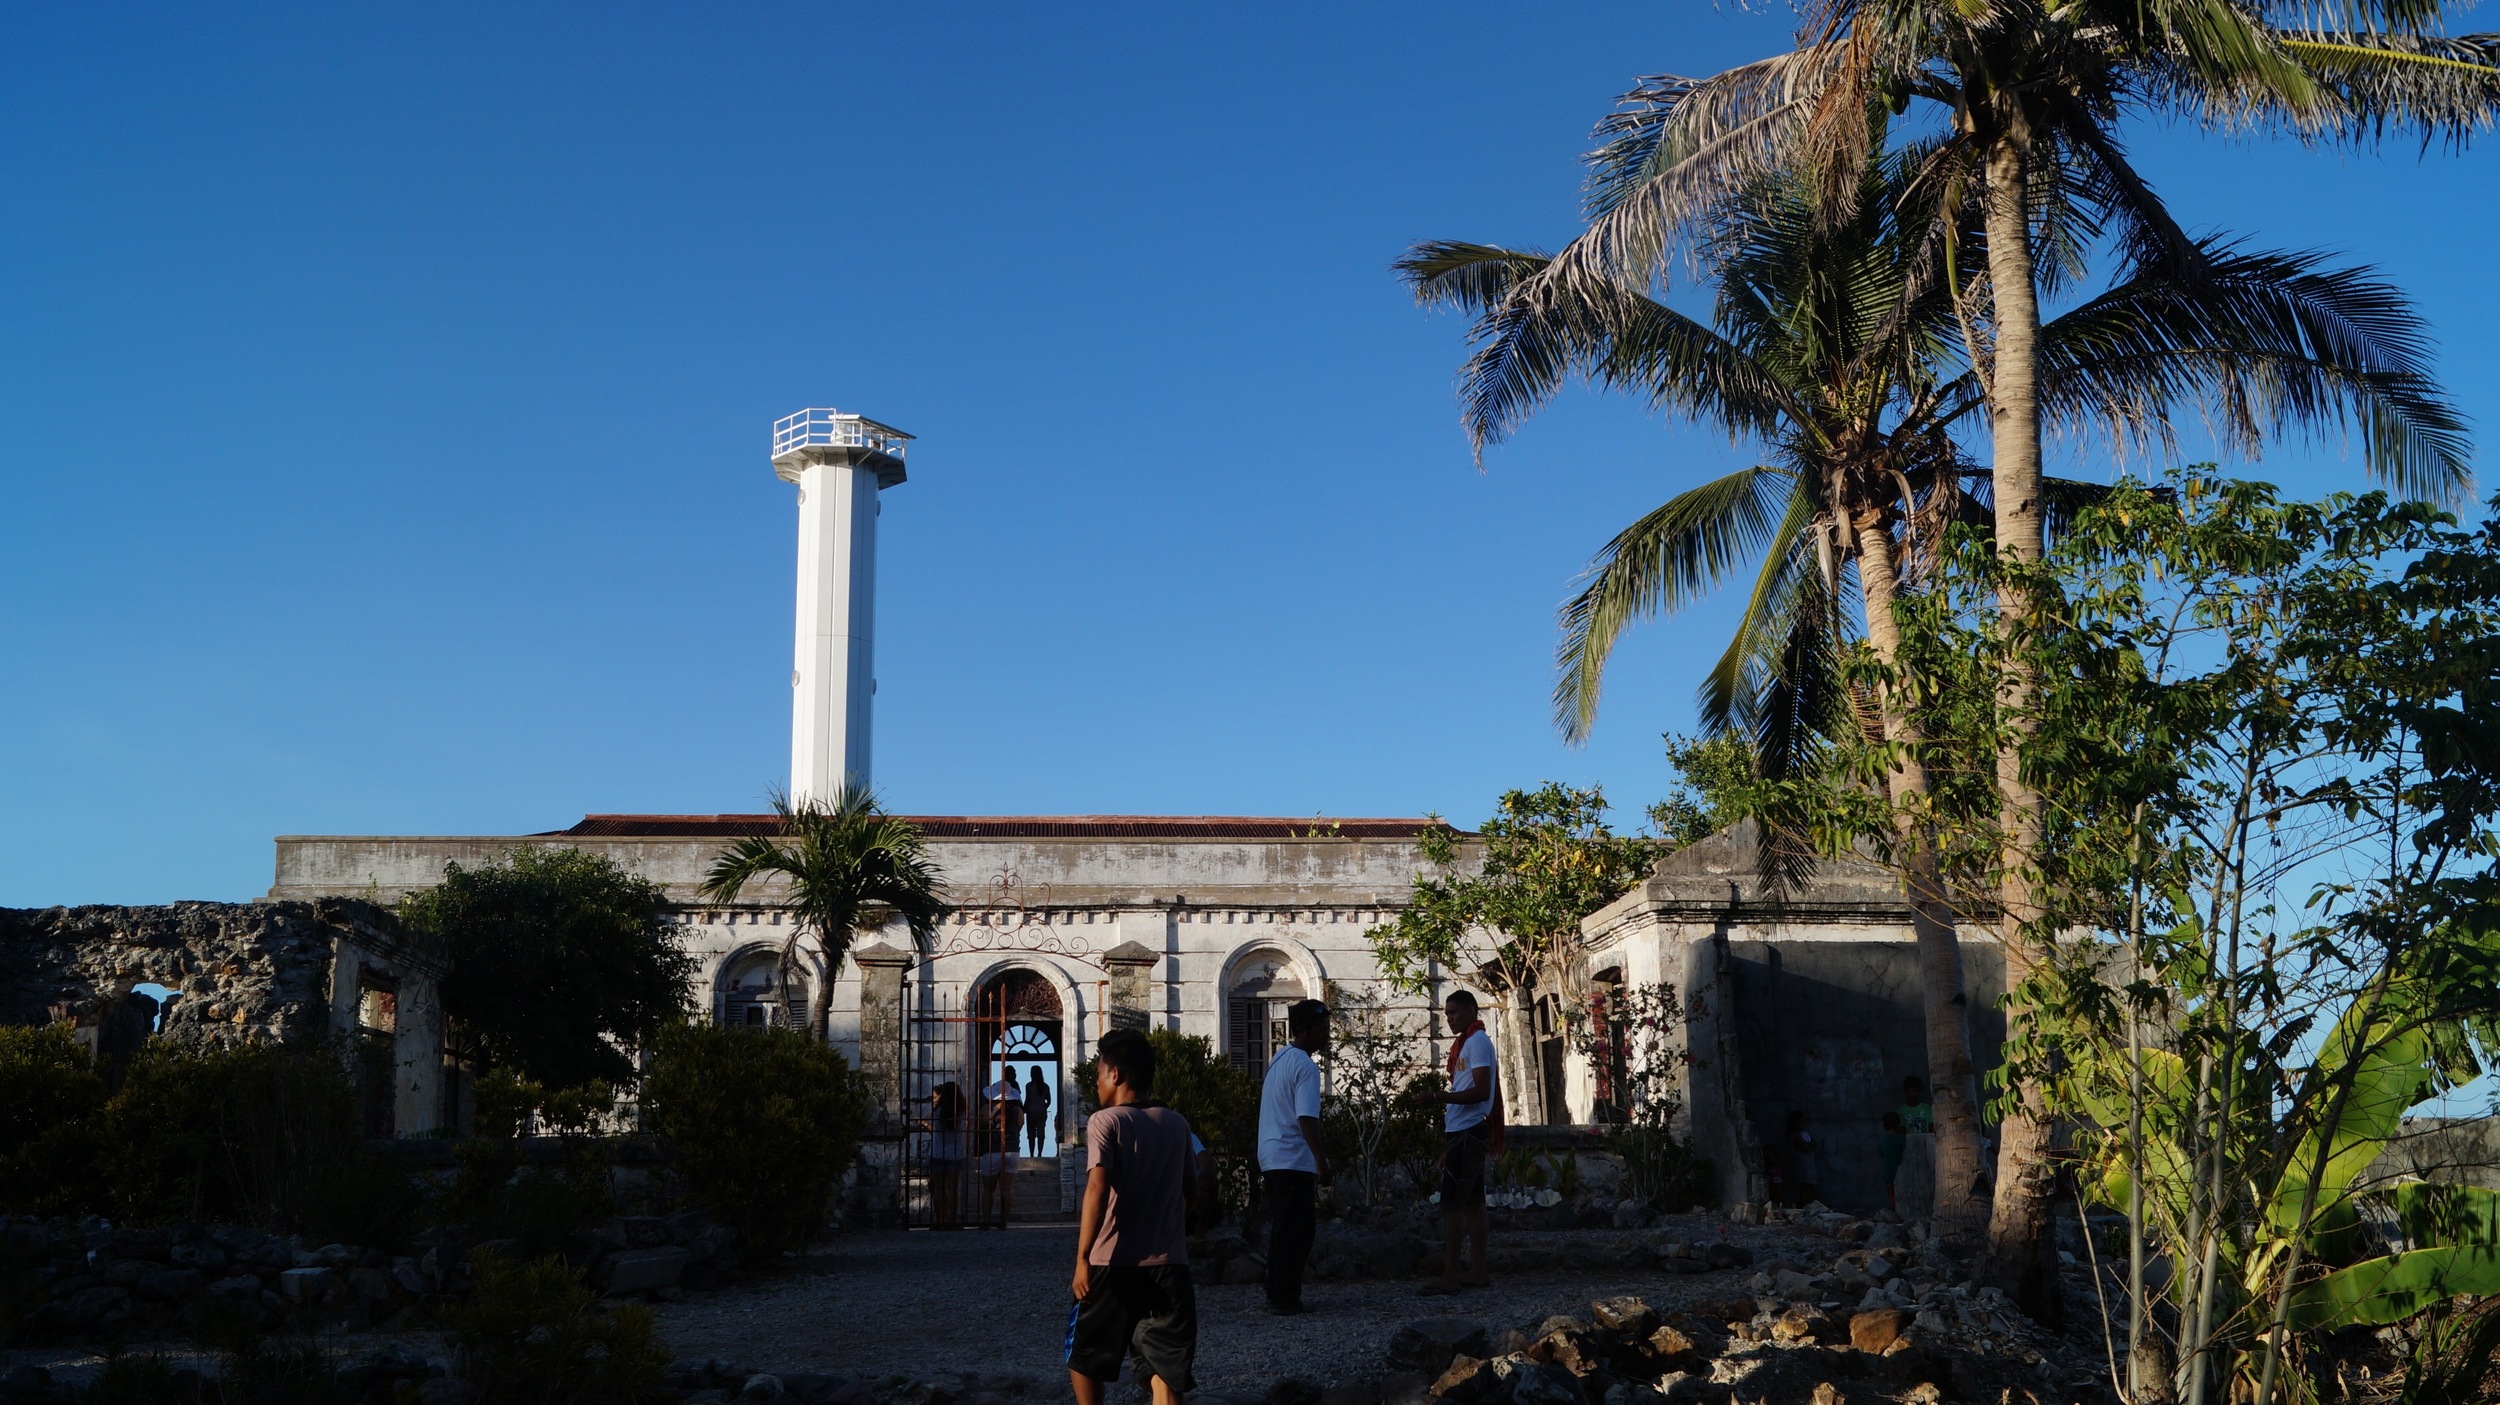 菲律宾，Islas de Gigantes  -  Gigantes Norte Lighthouse  - 照明beplay3体育官方下载“>
                </noscript>
                <img class=